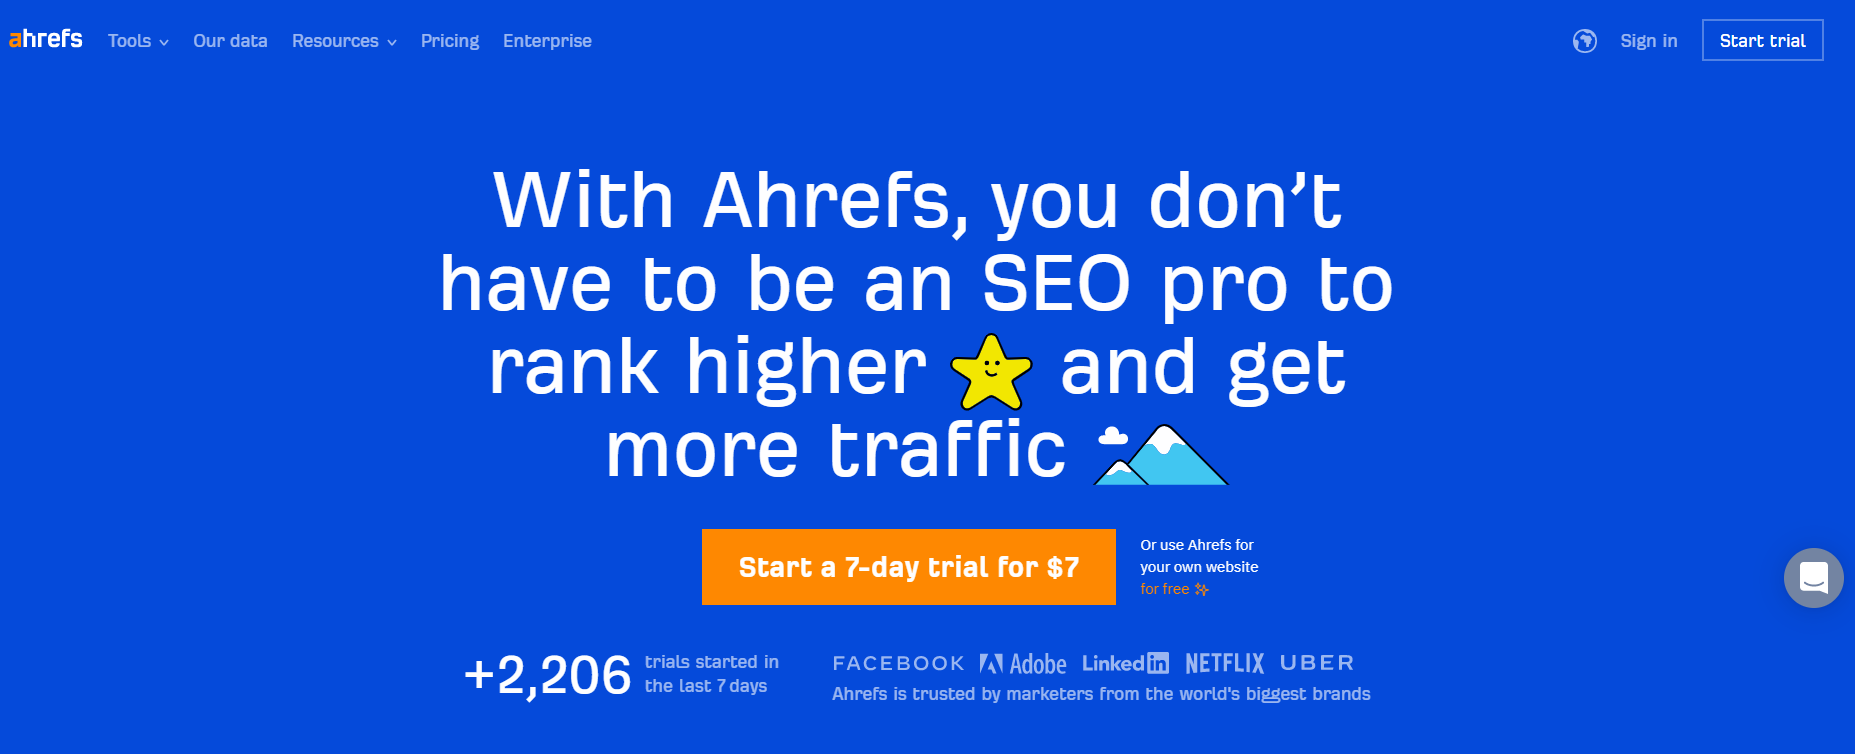 Ahrefs - Best Digital Marketing Tools